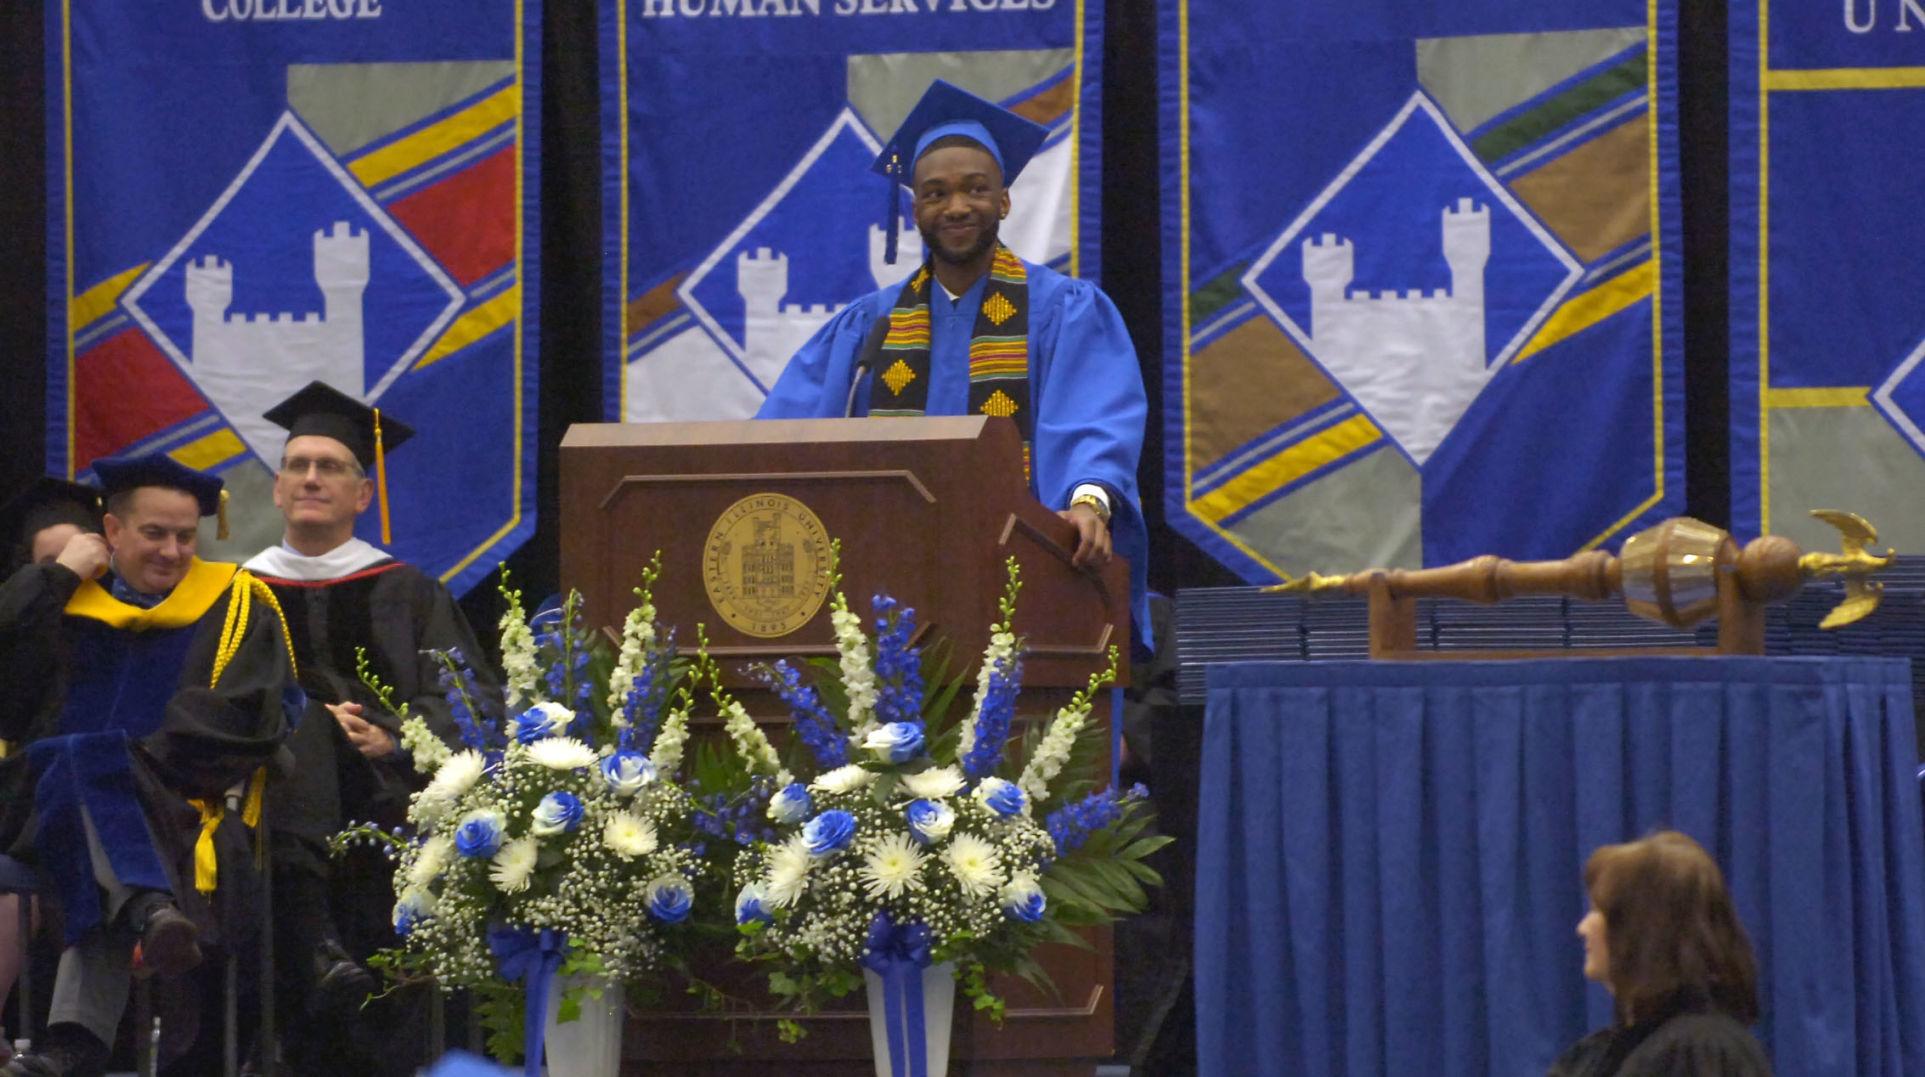 'A dream into a reality' Grad makes last big speech as Eastern